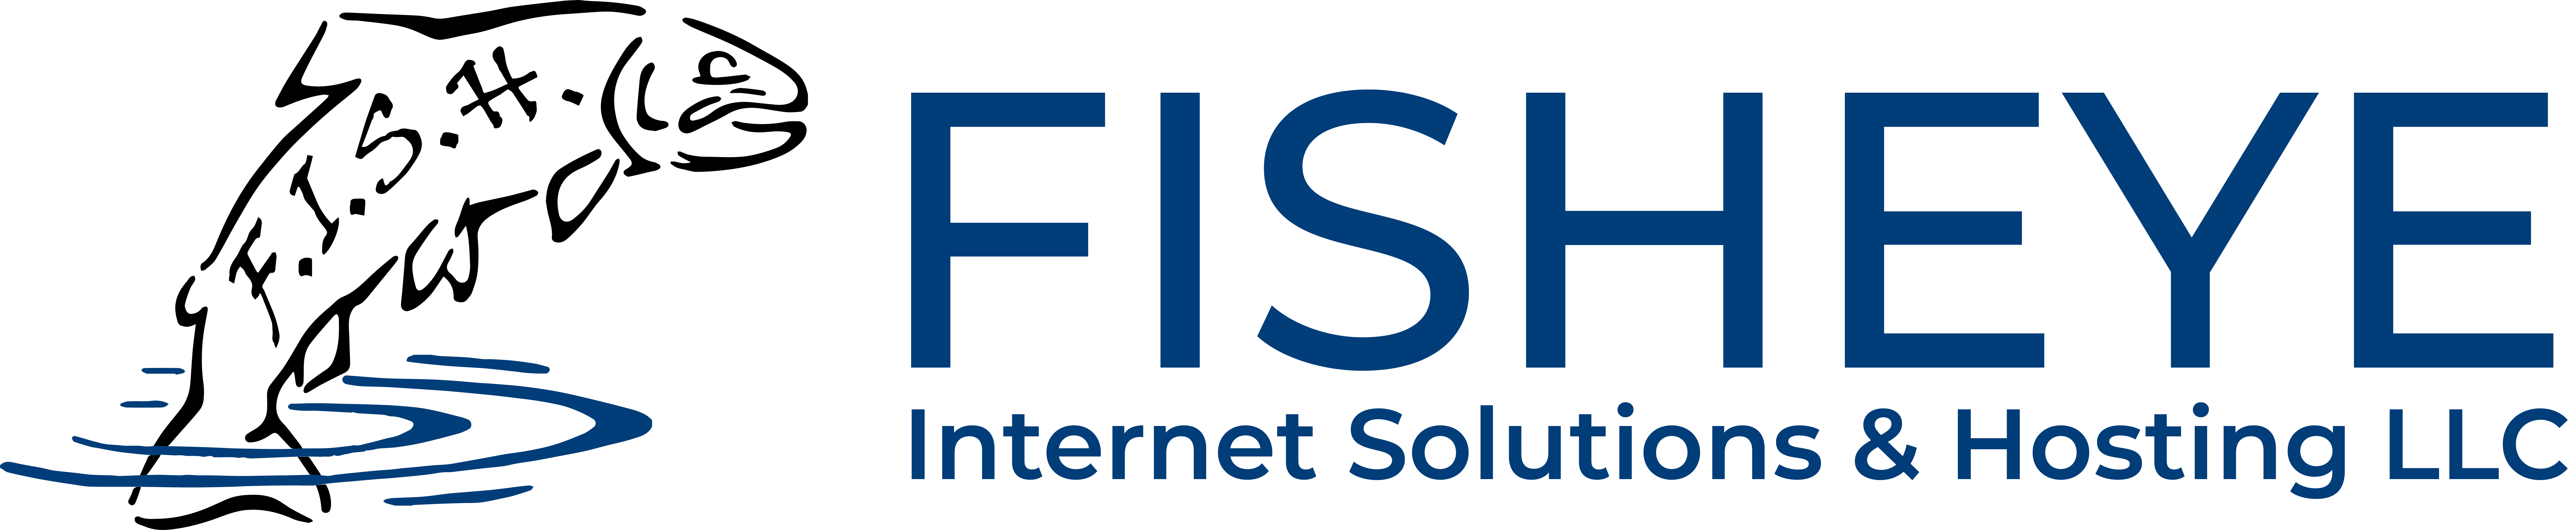 Fisheye Internet Solutions & Hosting LLC